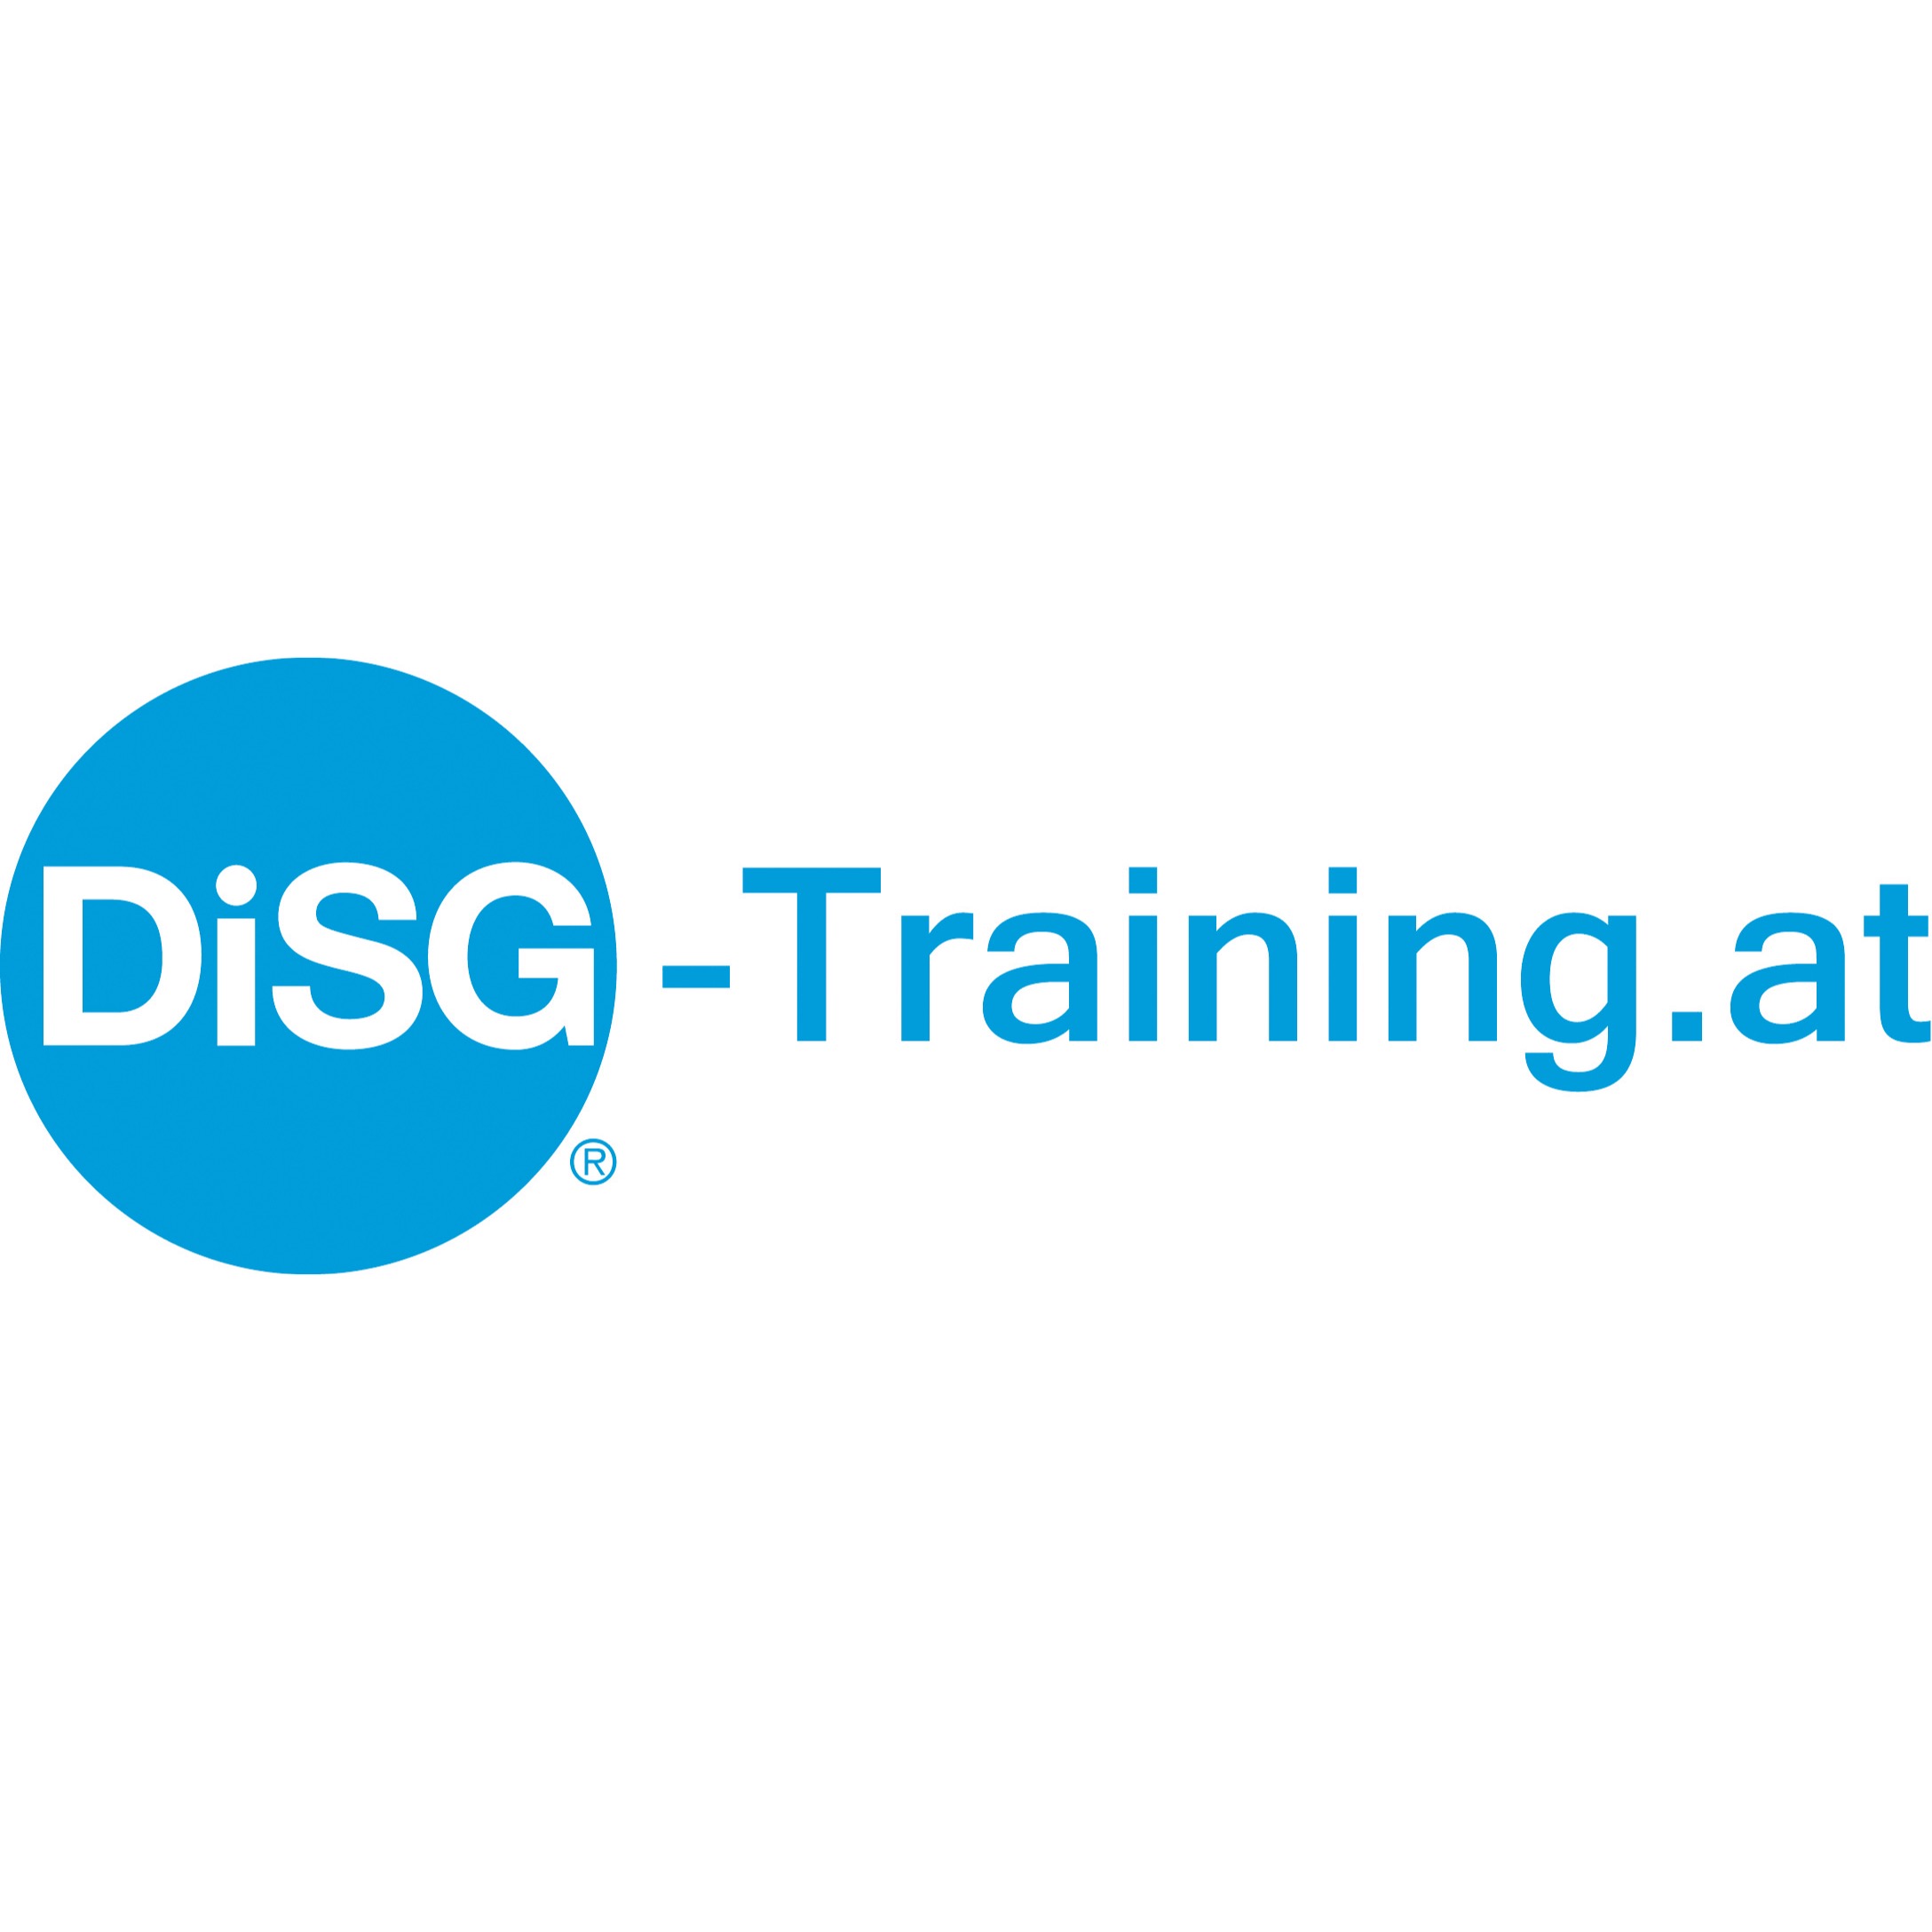 disg-training.at logo